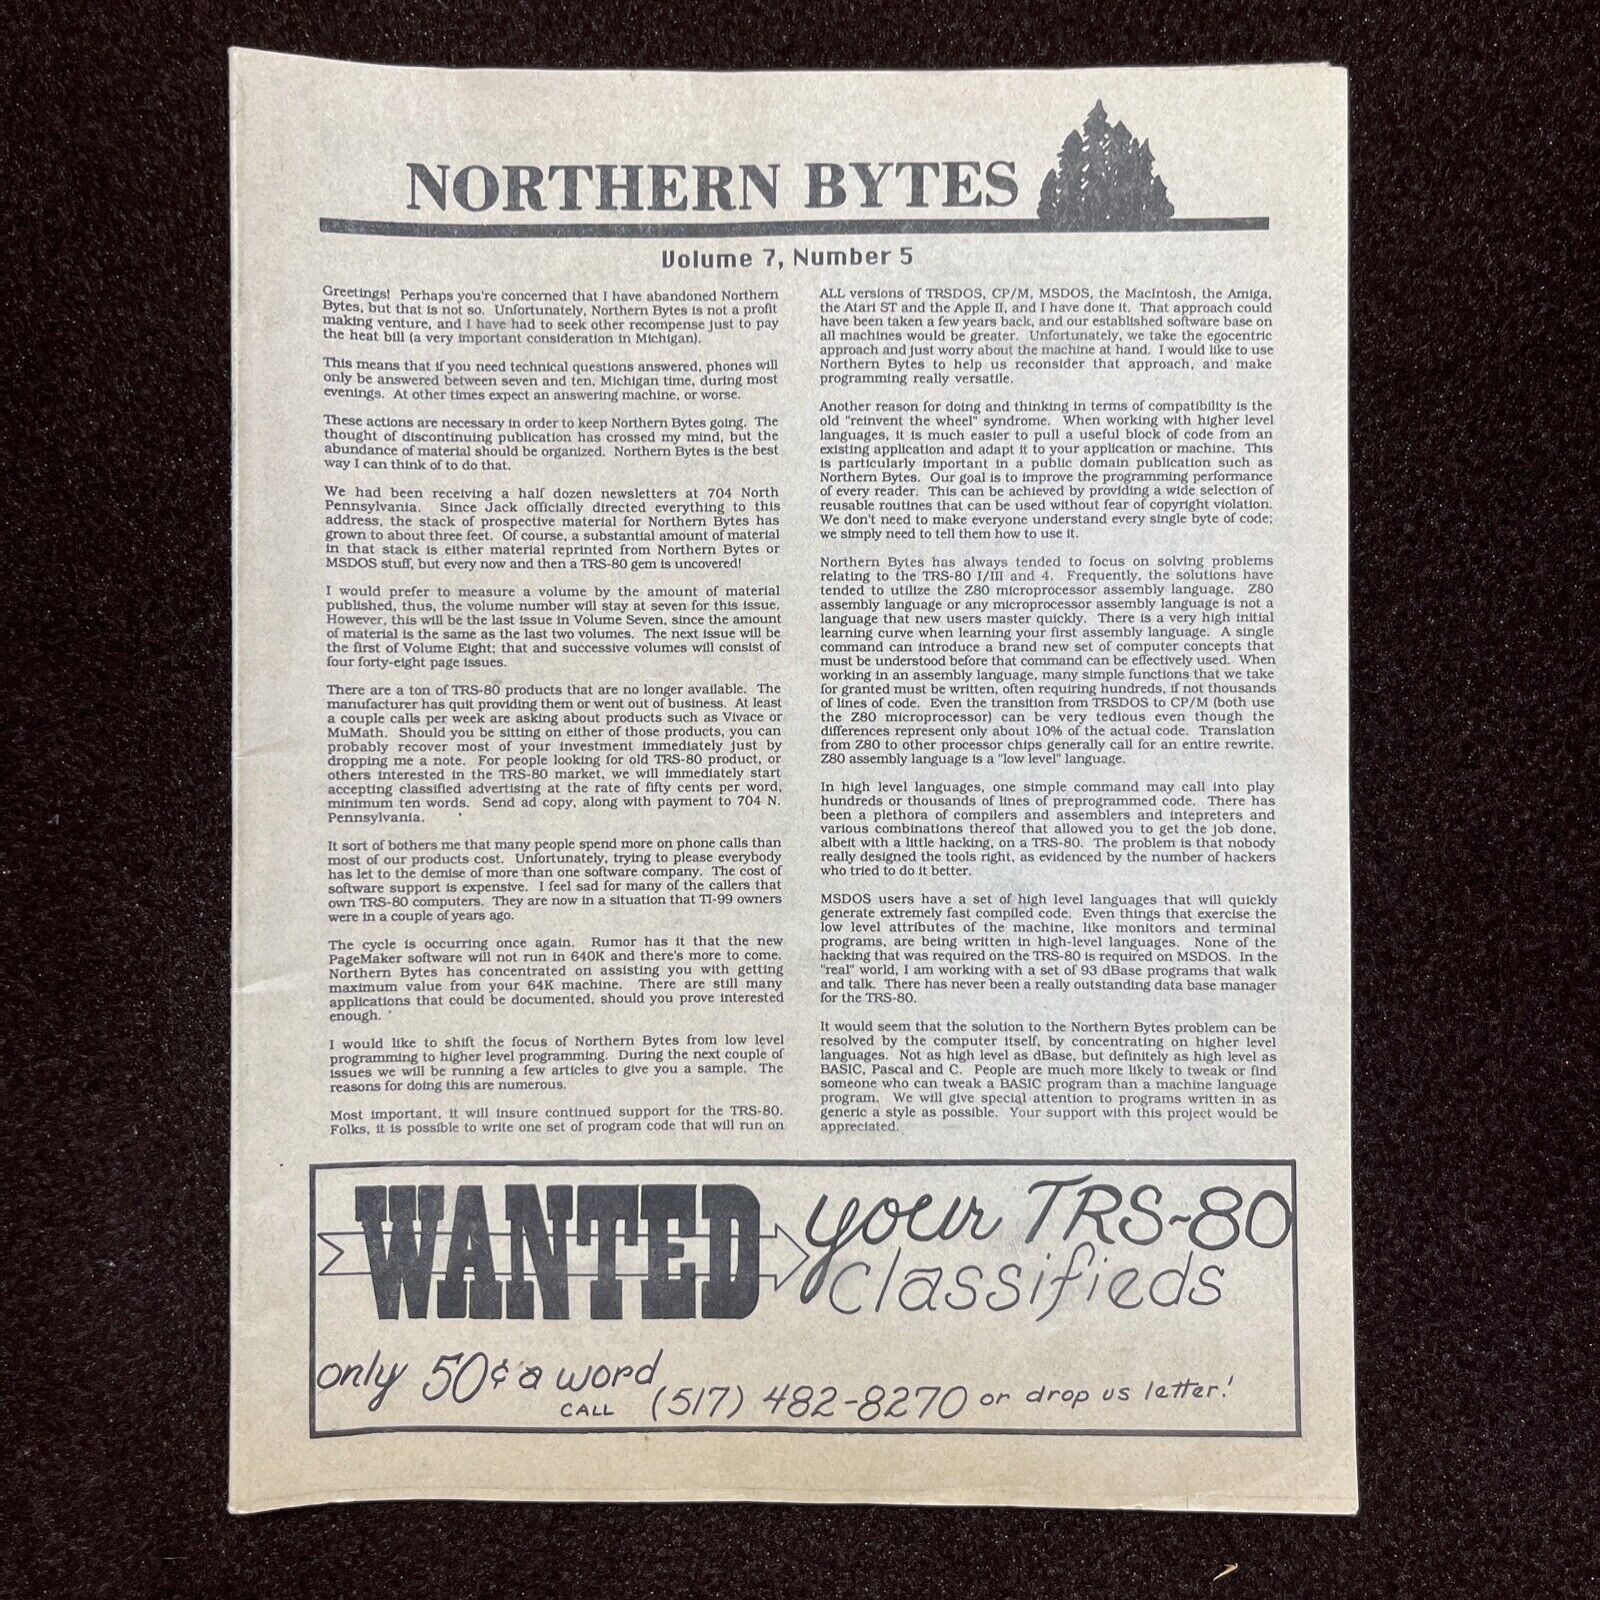 Northern Bytes TRS-80 Computer Magazine - Volume 7 Number 5 - 1985